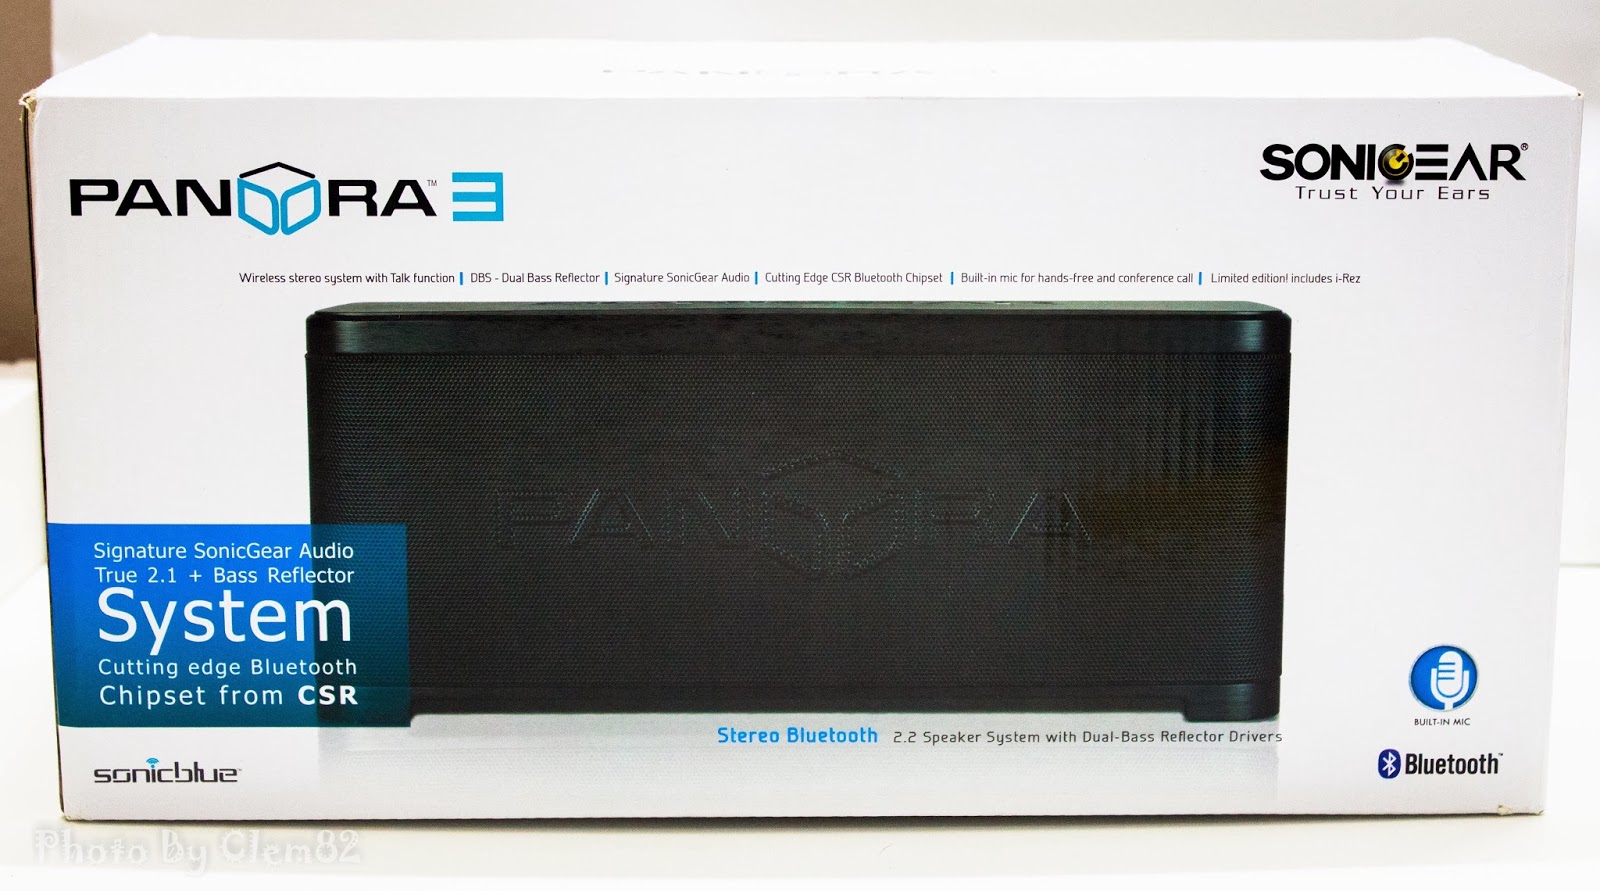 Opening Pandora's Box: SonicGear Pandora Wireless Bluetooth Media Player Series 162